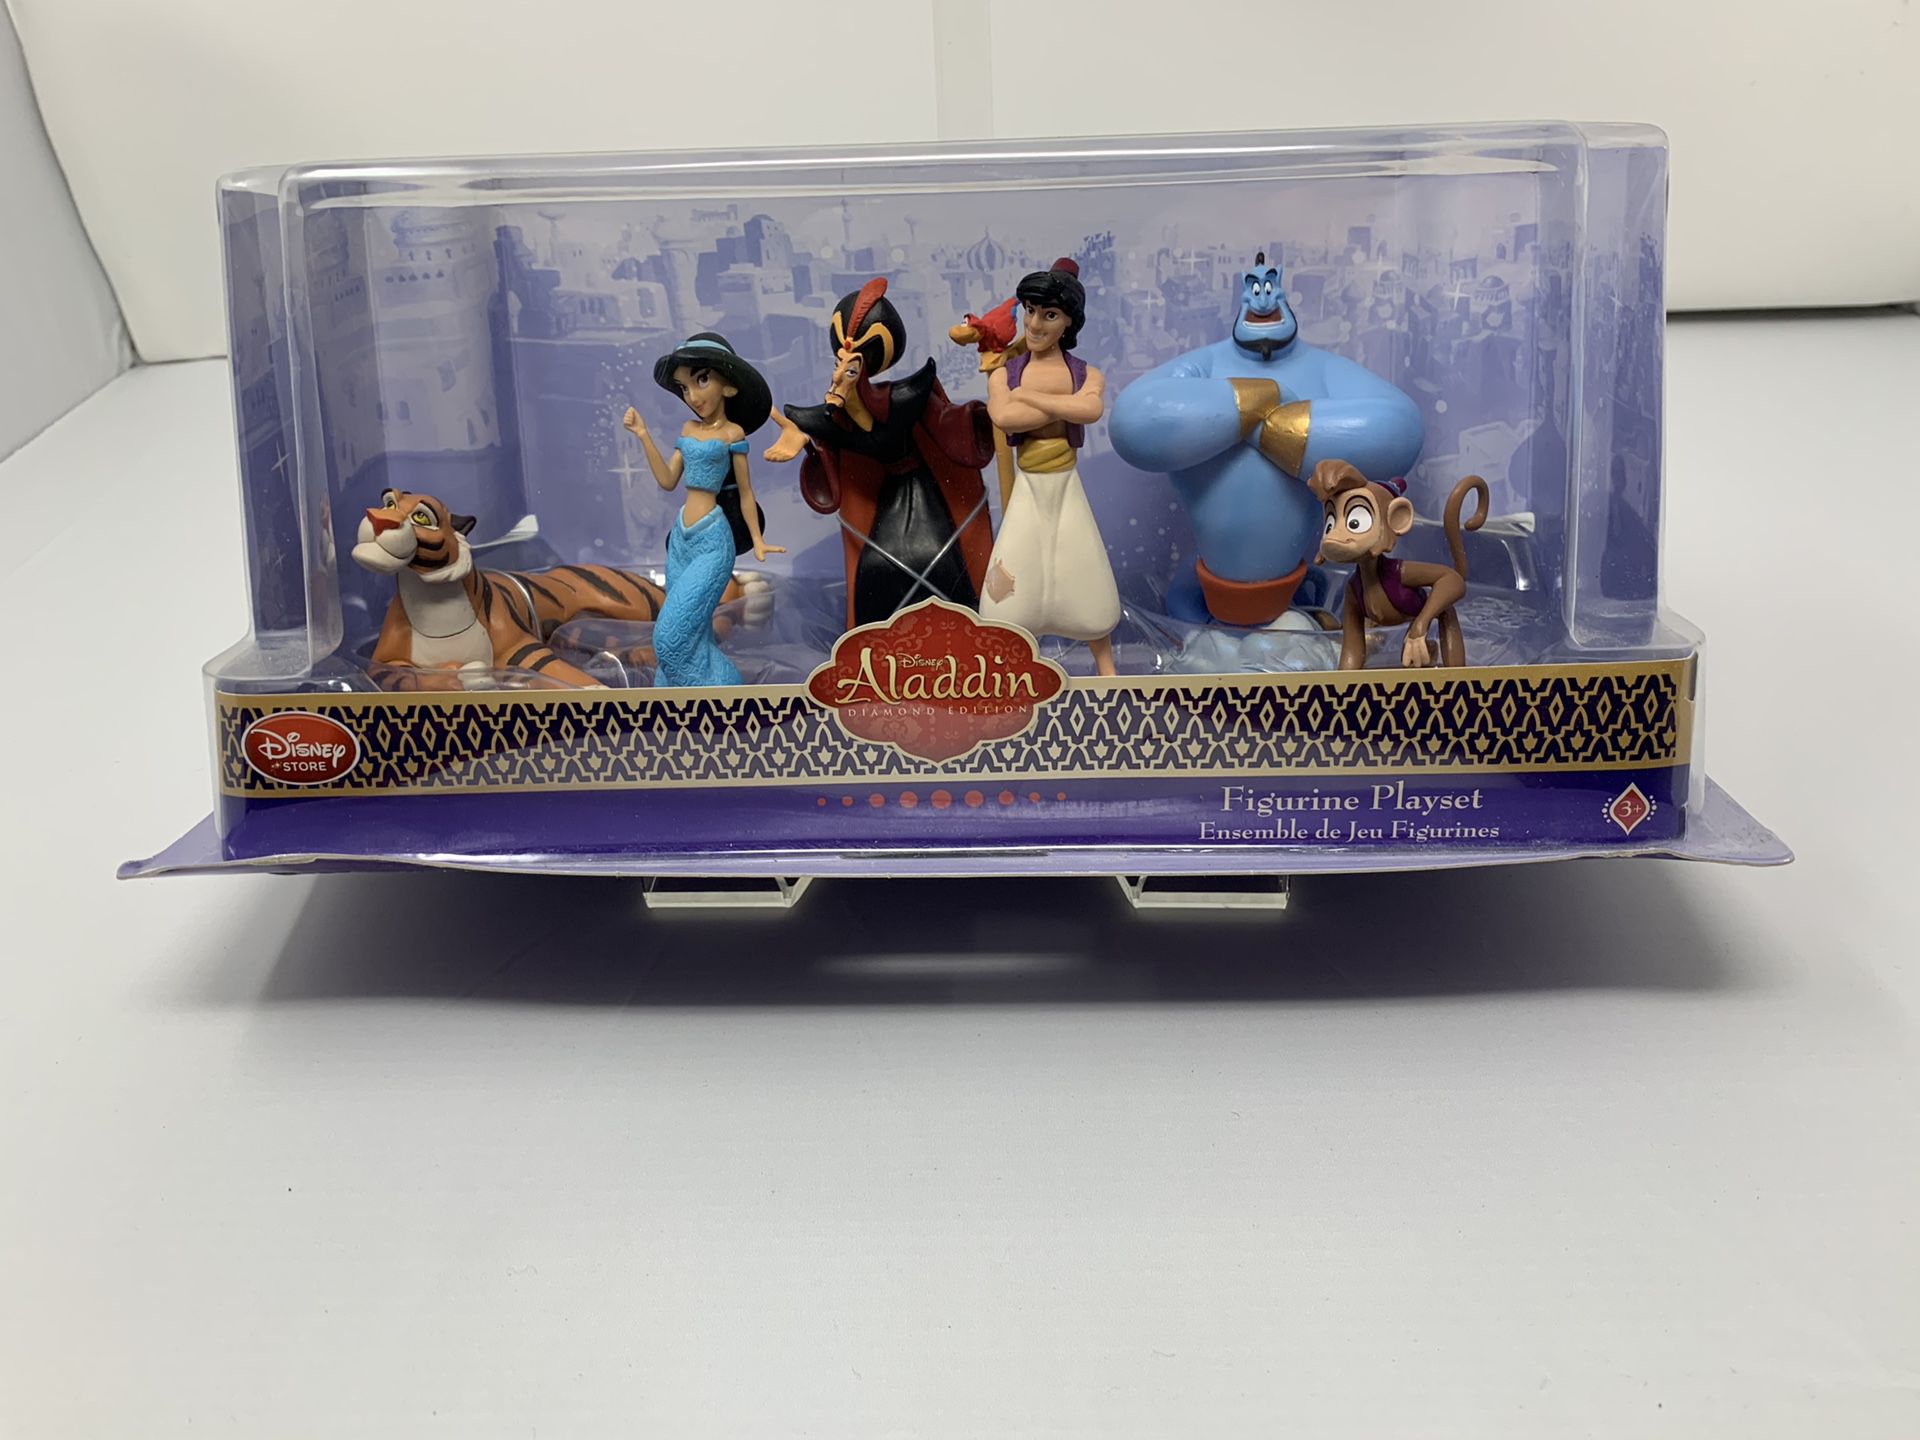 Disneys Classic Aladdin Diamond Edition Figurine Play set (Brand New)